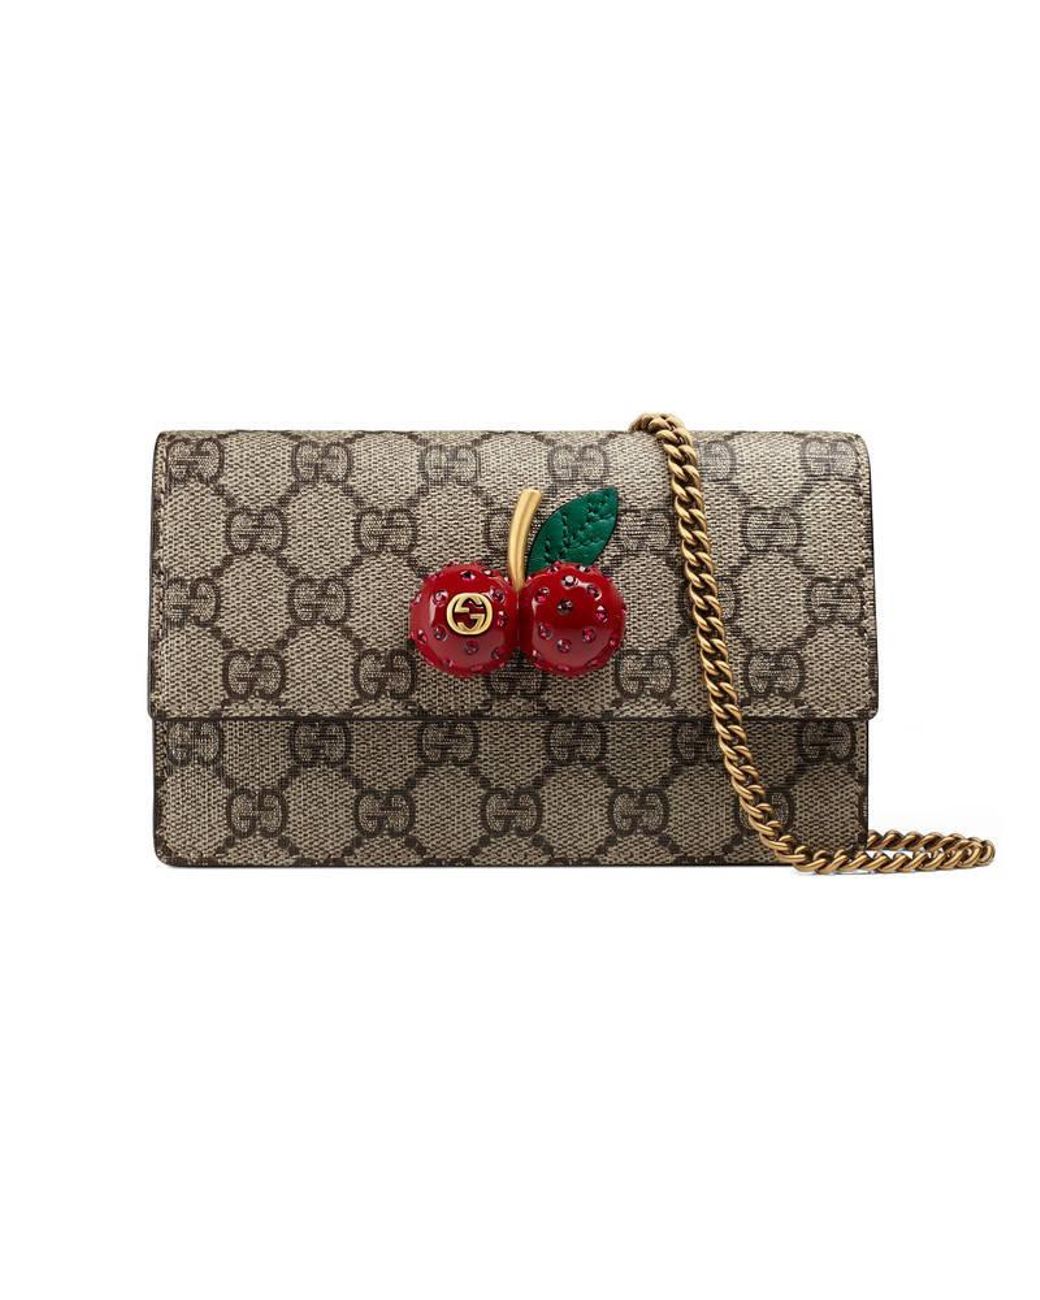 Gucci Gg Supreme Mini Bag With Cherries | Lyst